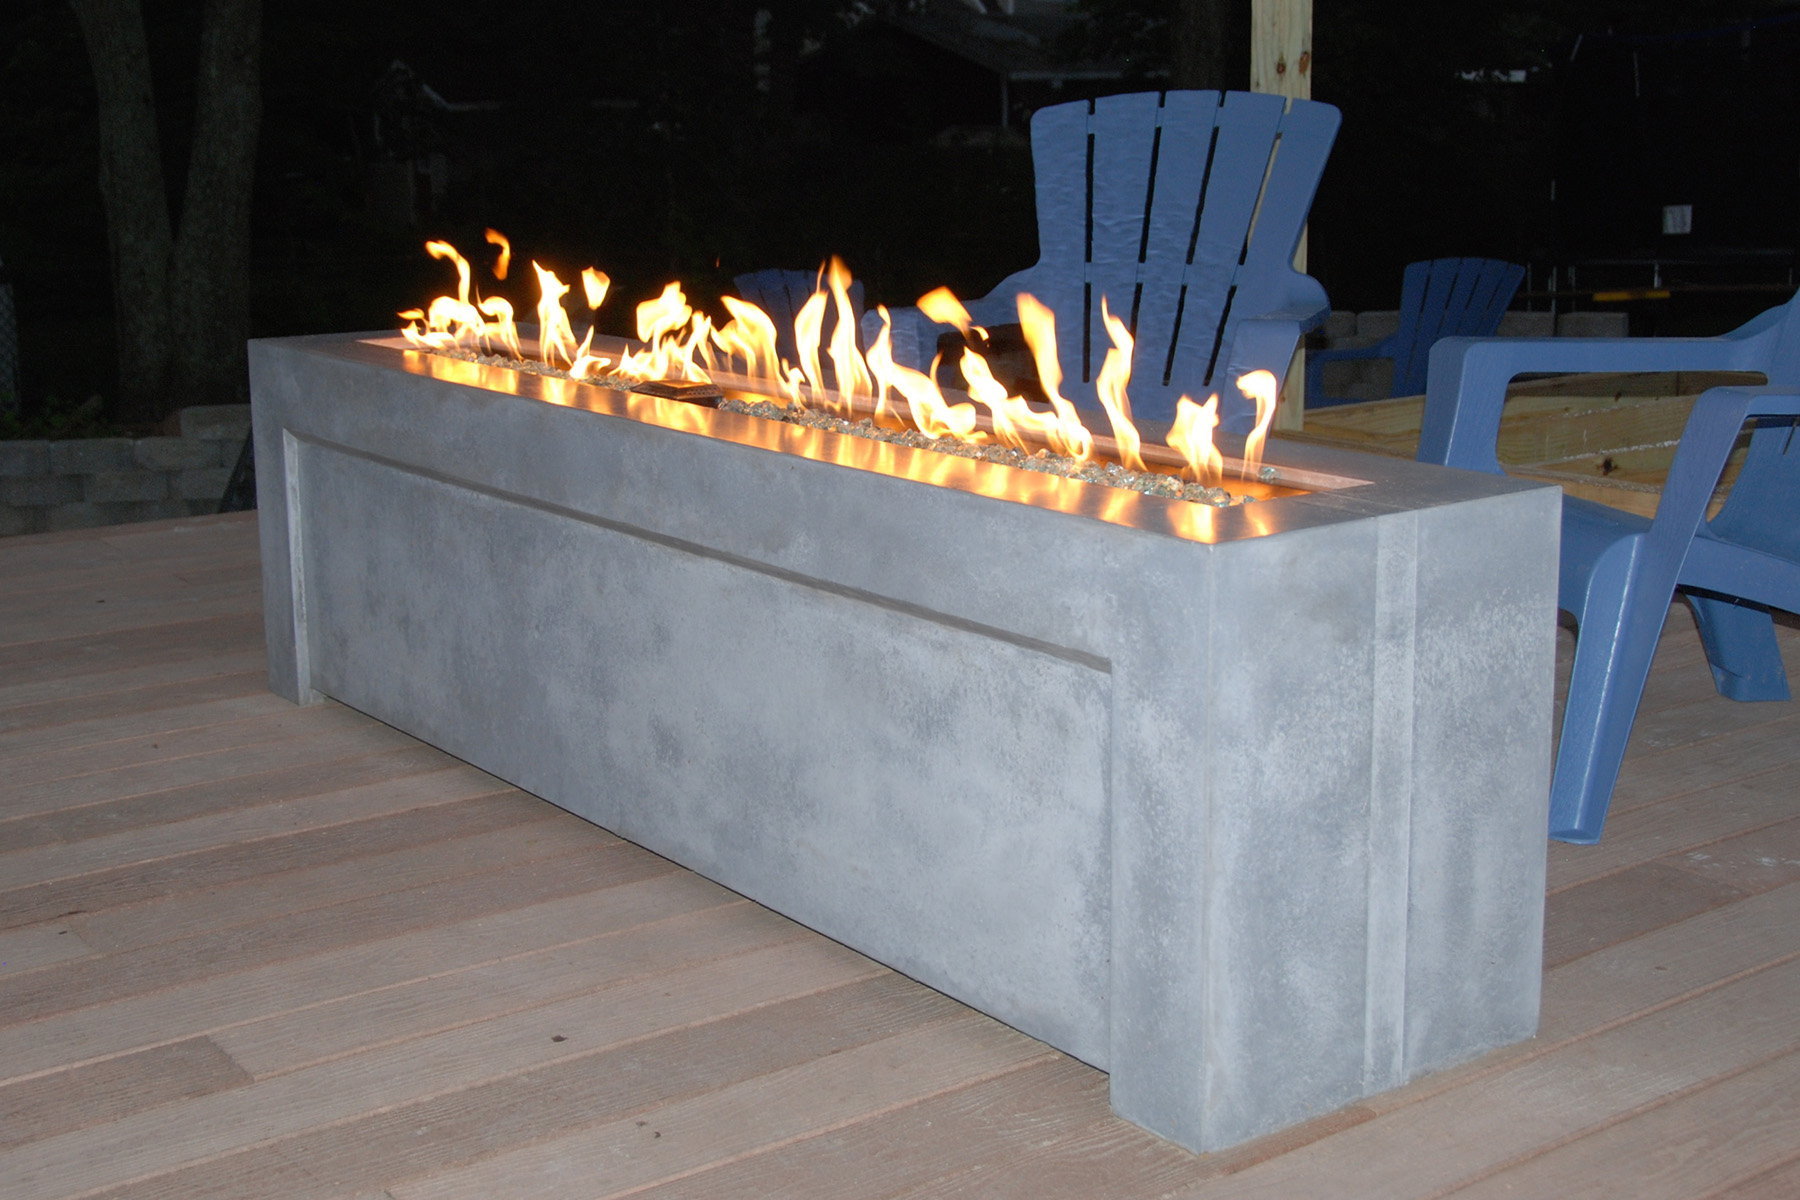 Precast Concrete Fire Pit Fireplace Design Ideas inside dimensions 1800 X 1200